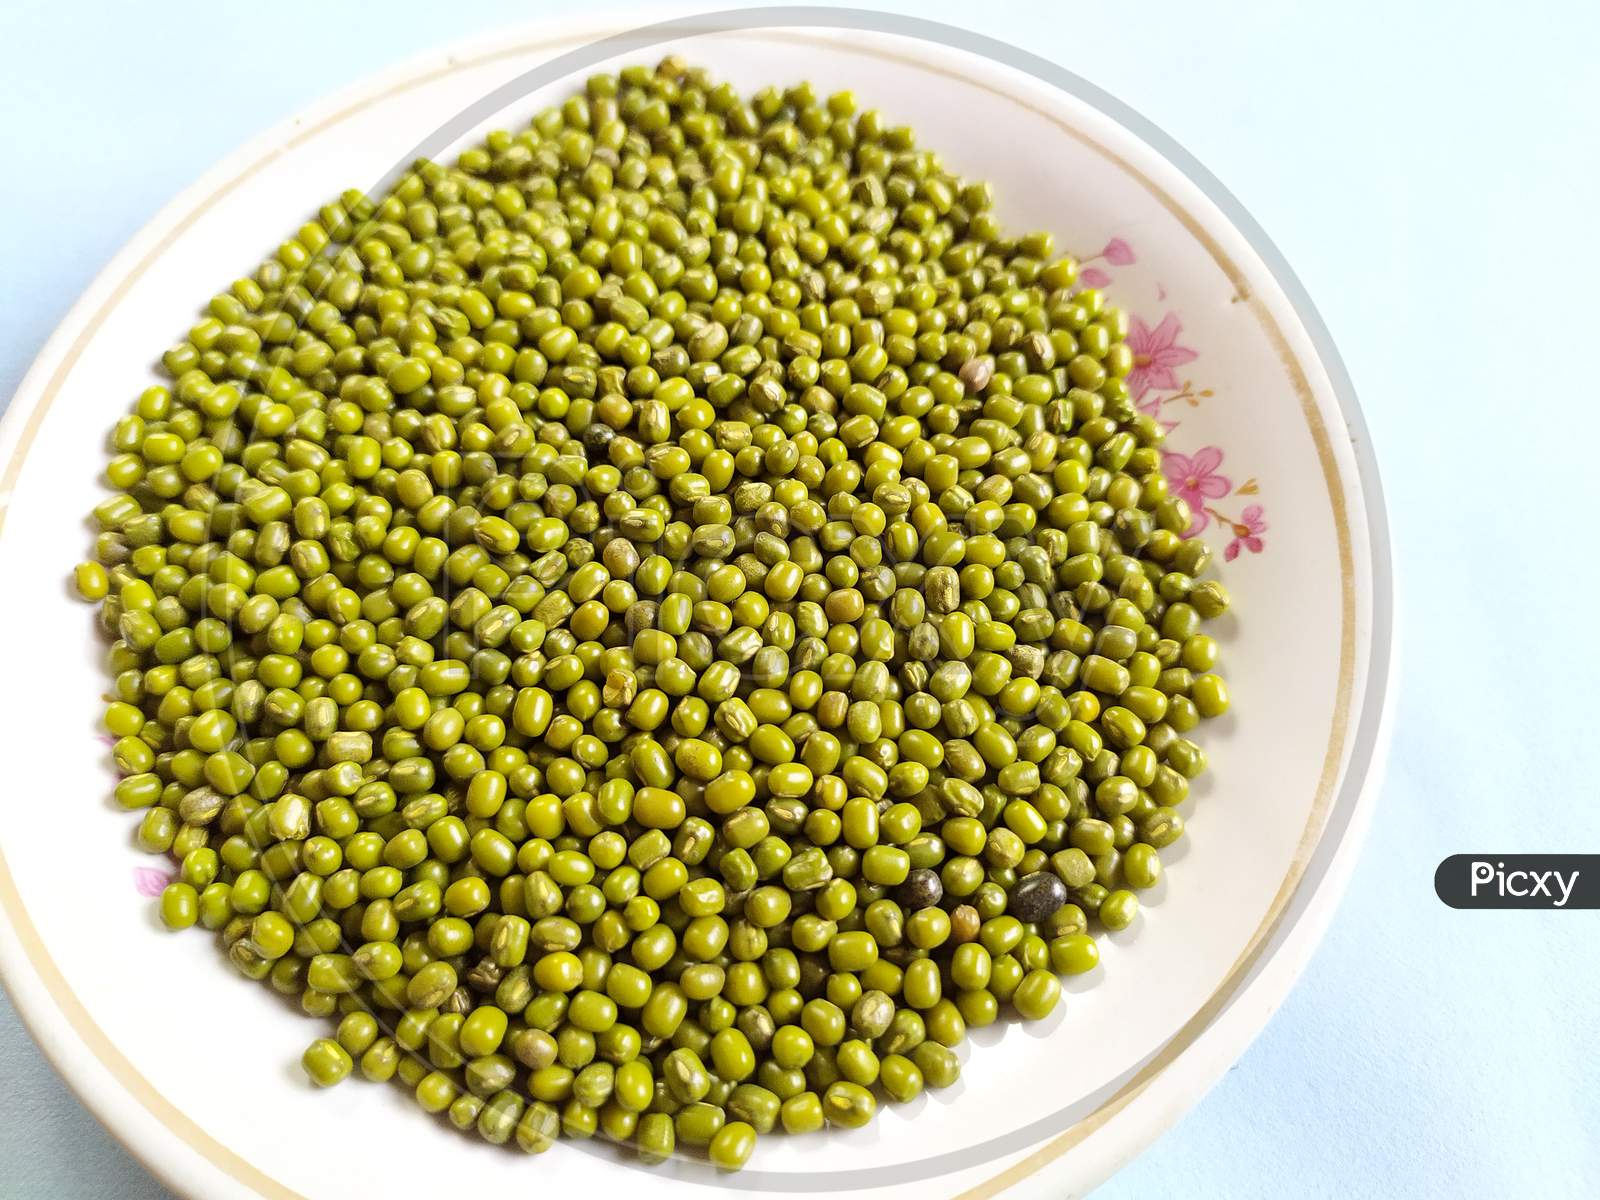 Green mung beans on plate.